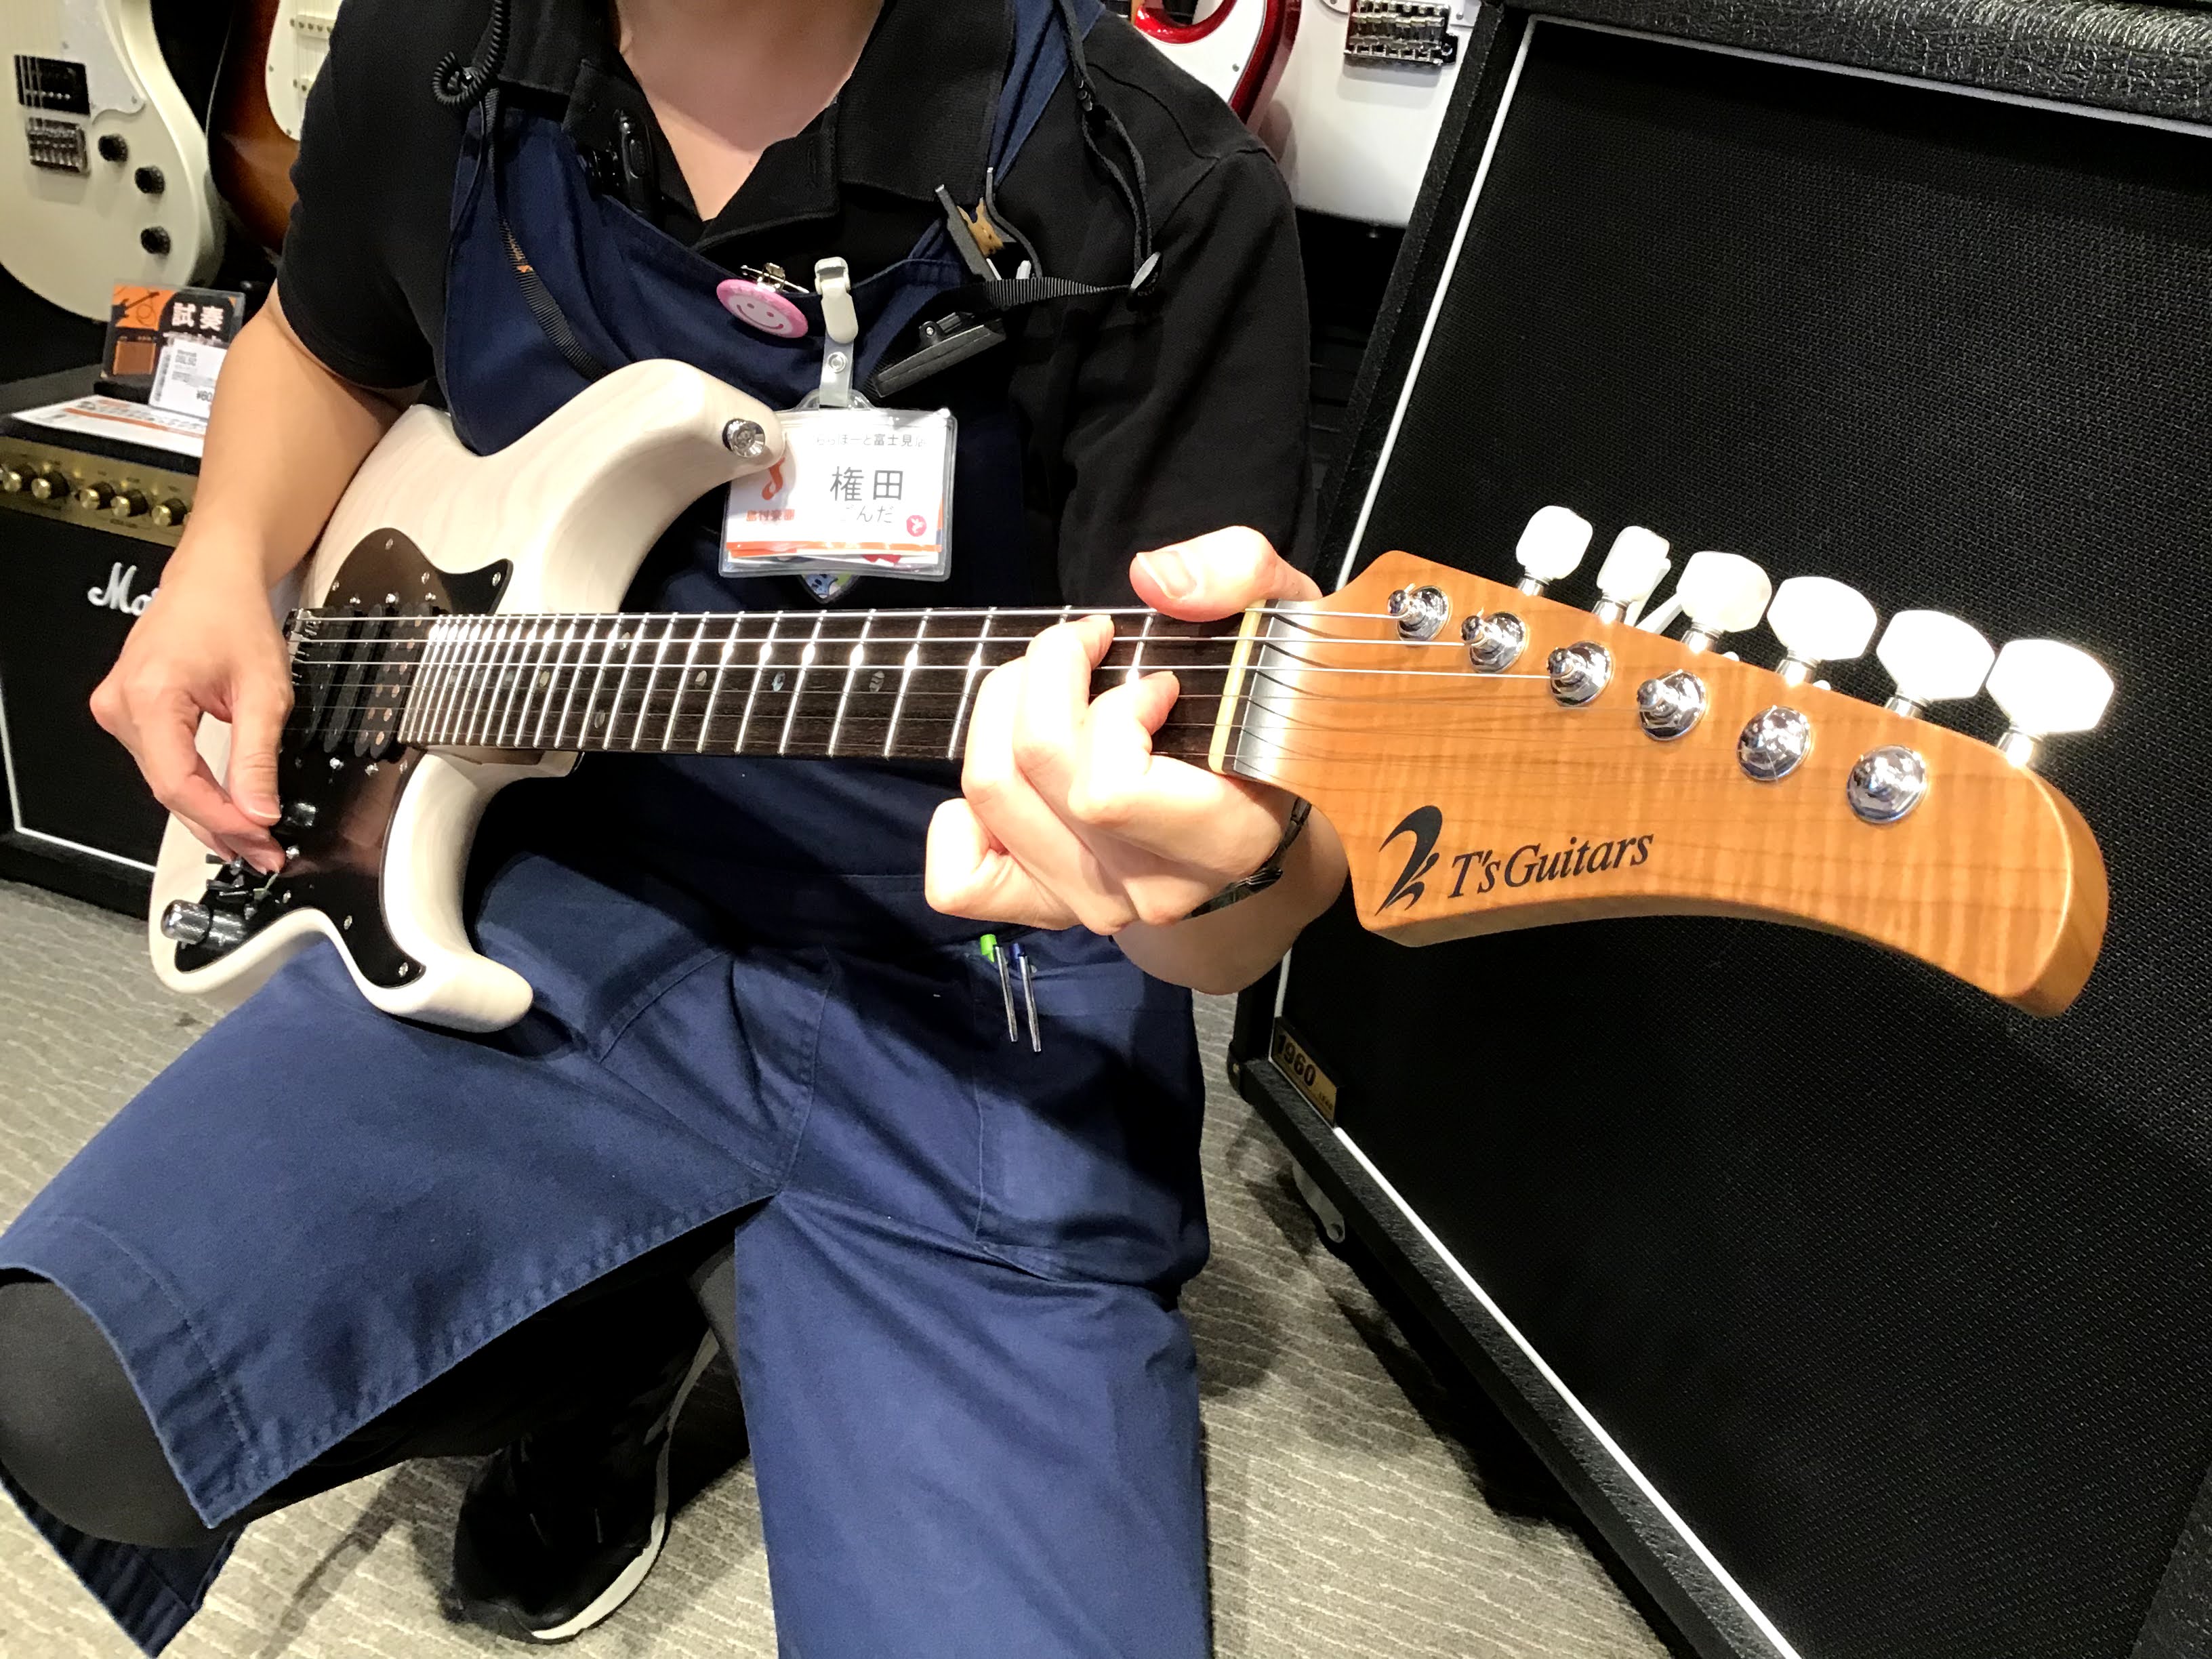 T's guitars　島村楽器ららぽーと富士見店